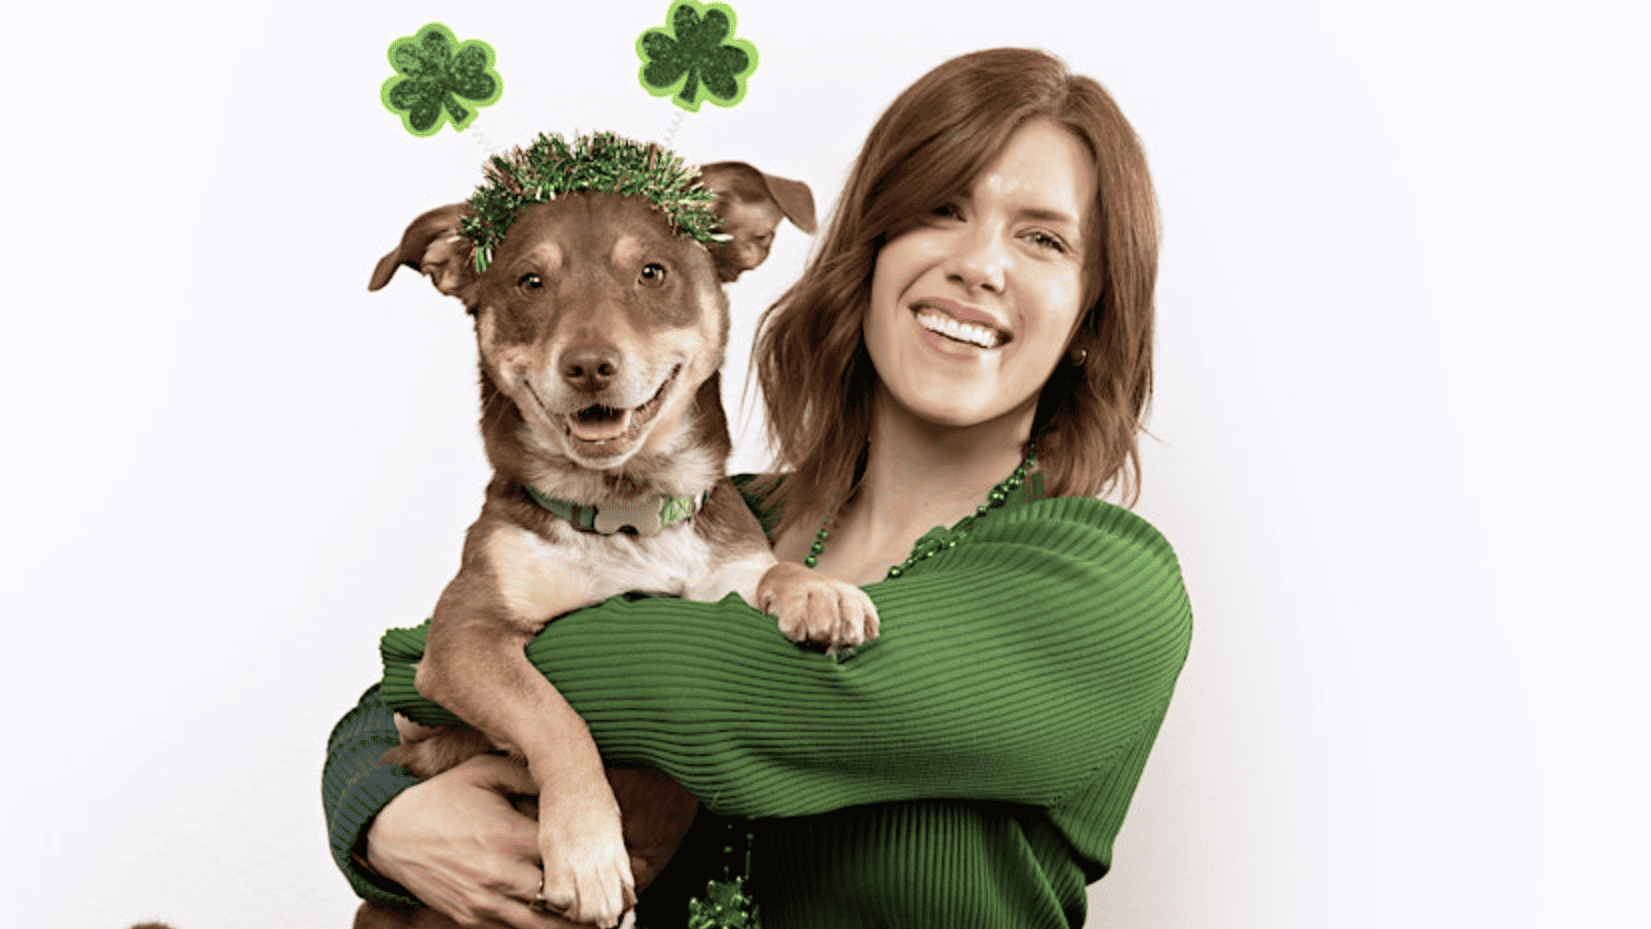 woman wearing green shirt hold dog wearing shamrock headband